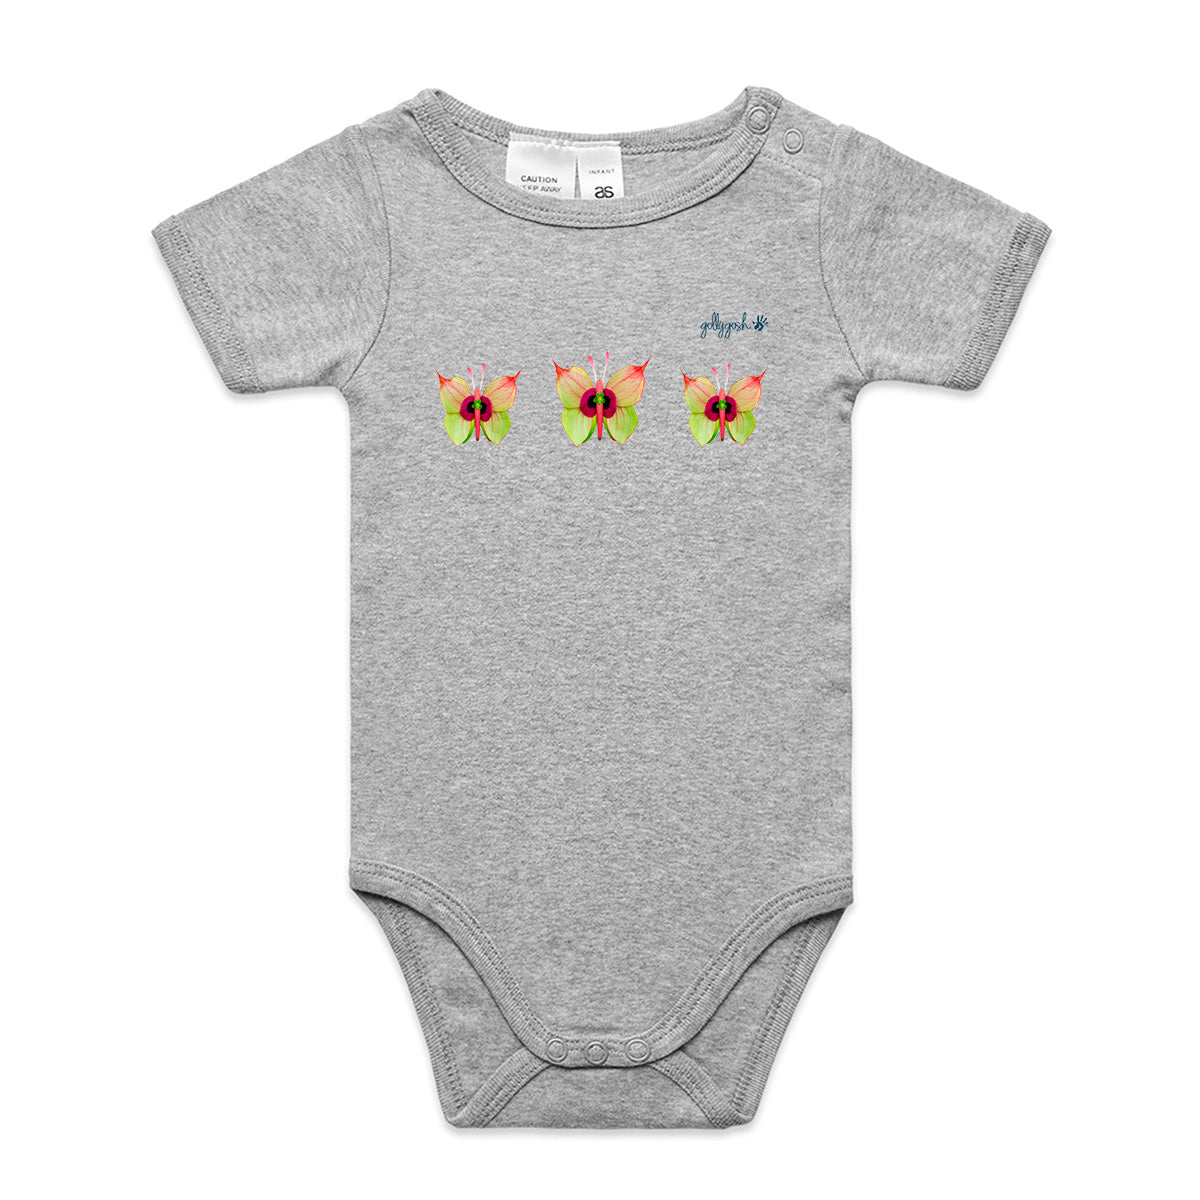 Anthurium Butterflies - Infant Baby Grow